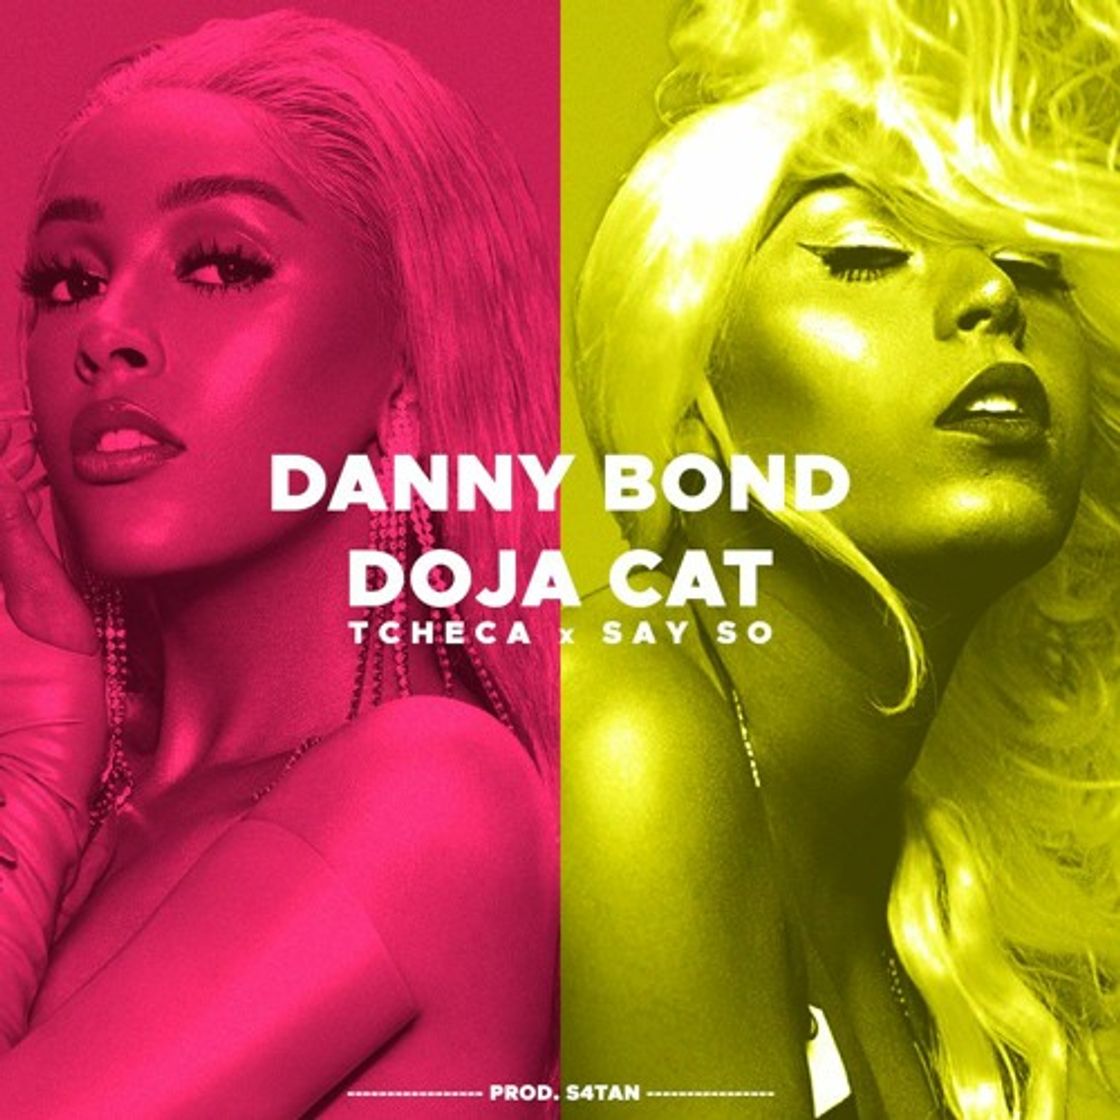 Tcheca x say so - Danny Bond, Doja Cat  (mashup)